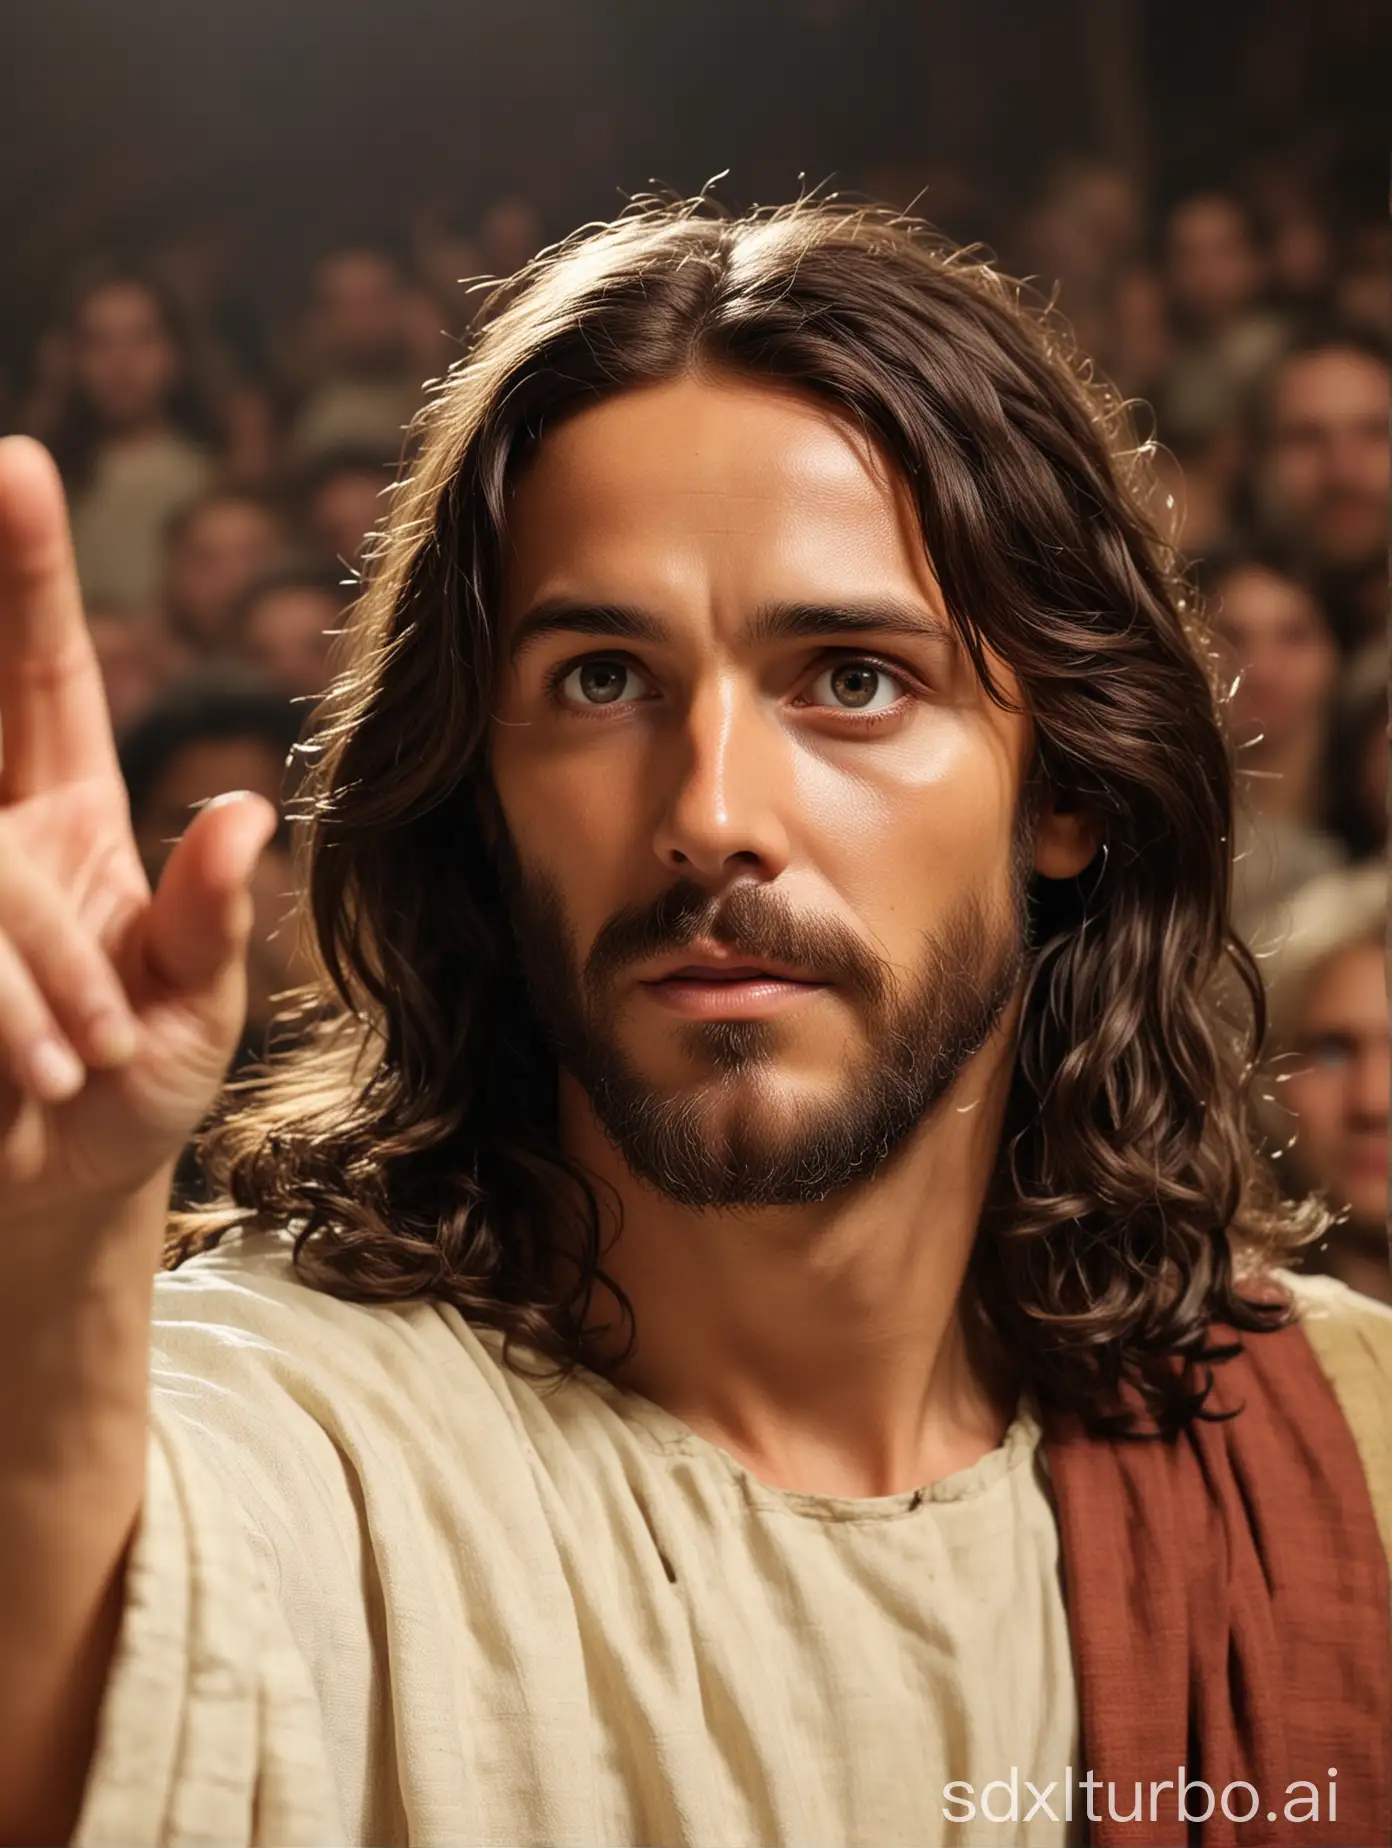 Jesus-Pointing-with-Intense-Gaze